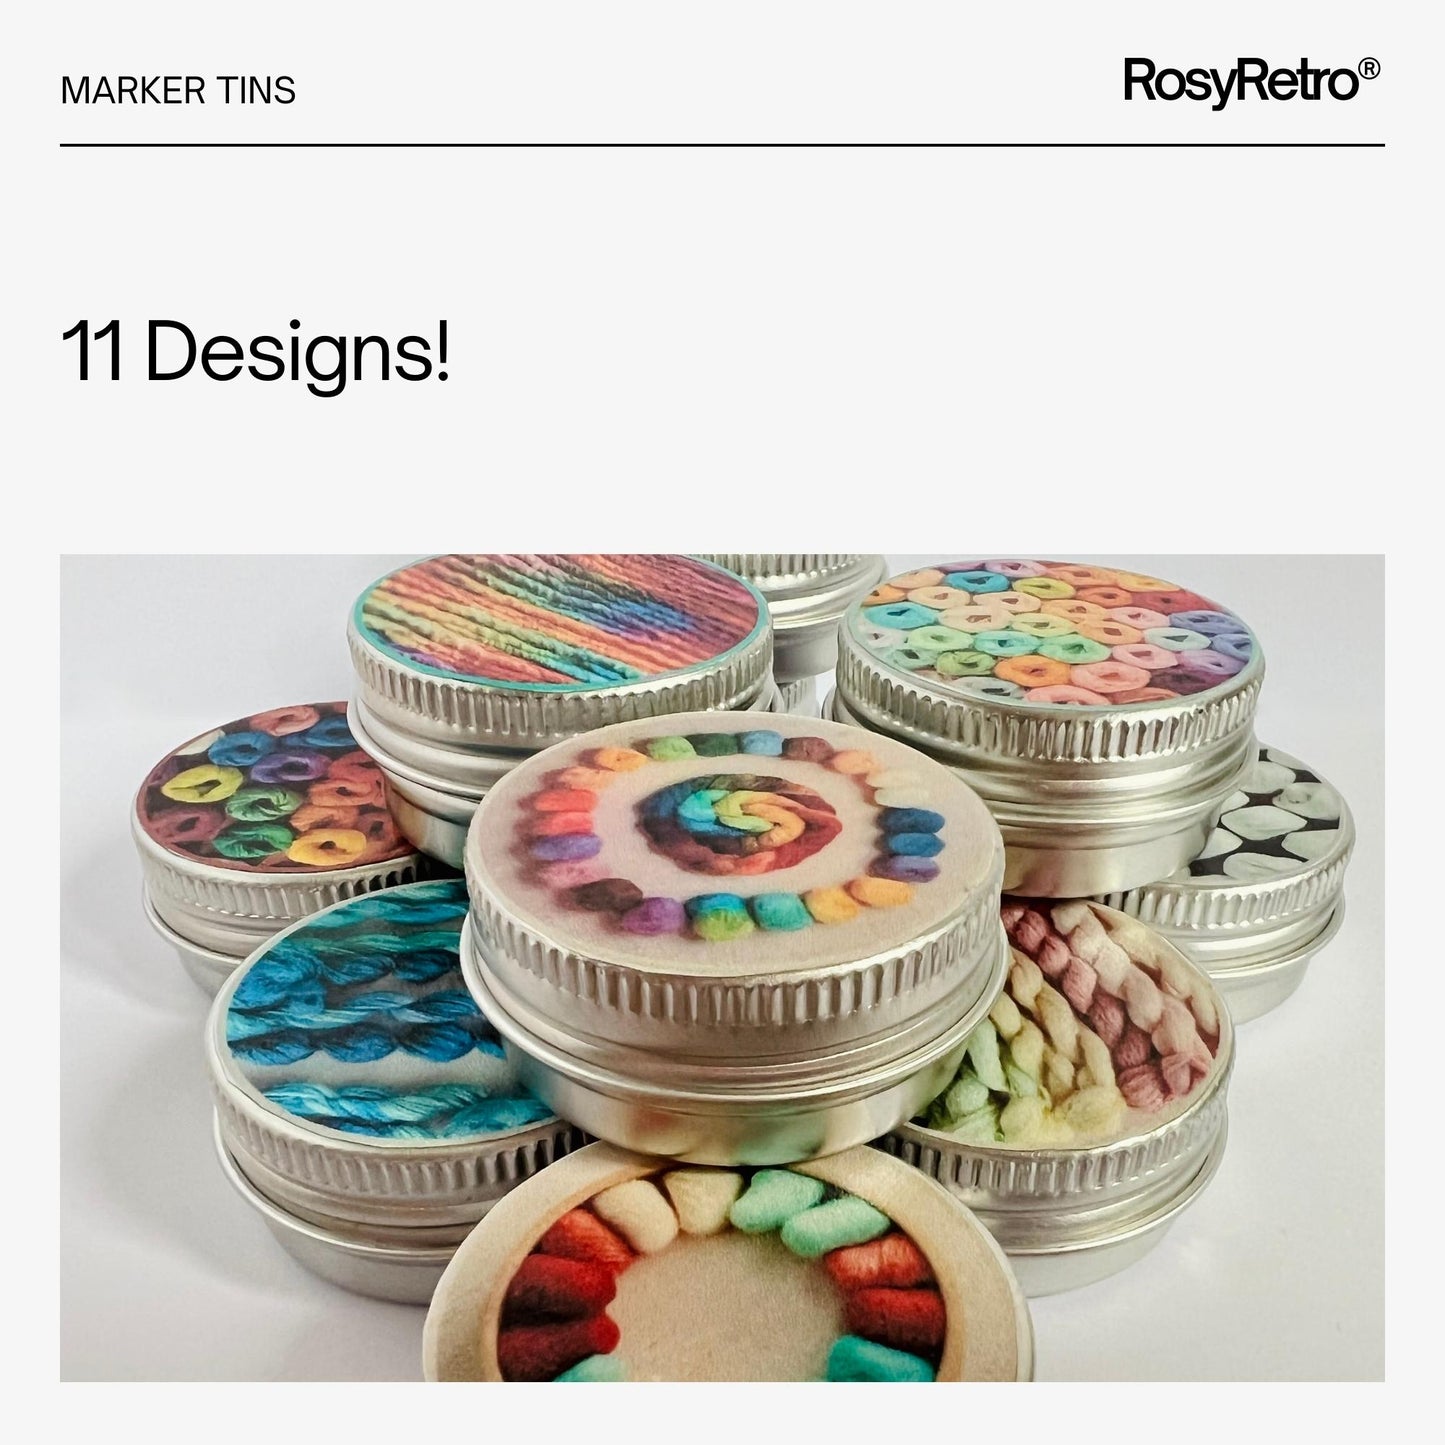 Knitting Stitch Marker Tin Set 40 Markers and tin - Rainbow Yarn